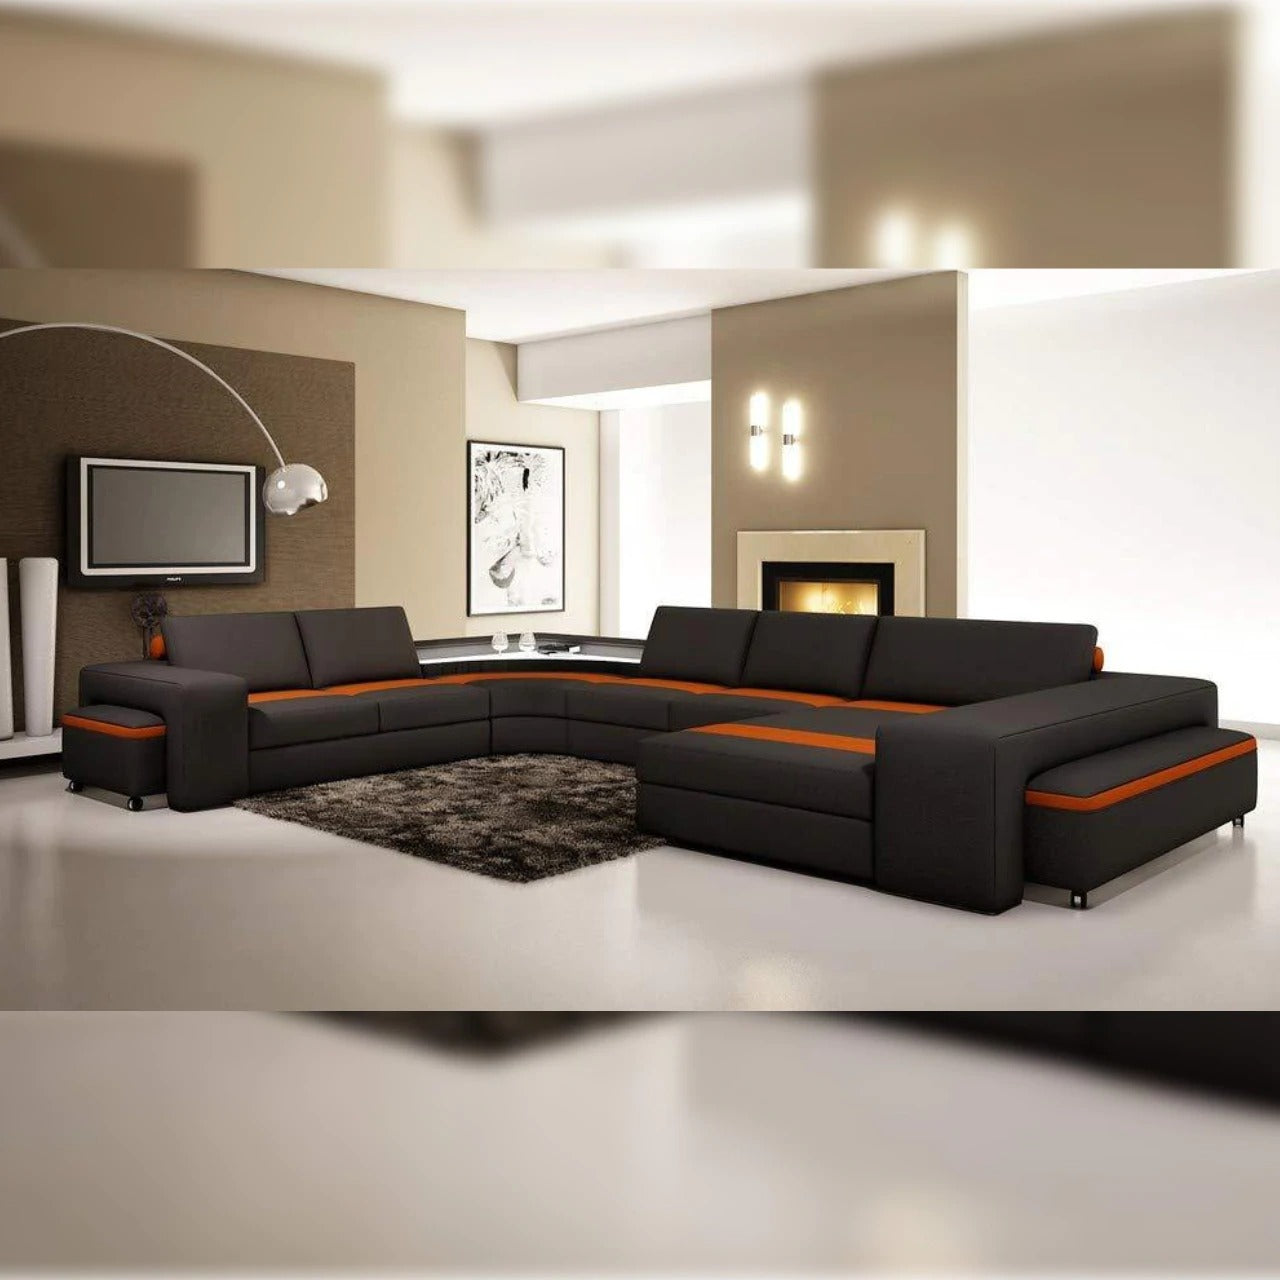 U Shape Sofa Design, Modern U Shaped Sofa Designs, Latest Designs Of U Shape Sofa Set, Trending U Shape Sofa Designs, U Shape Reversible Corner Sofa Set Designs